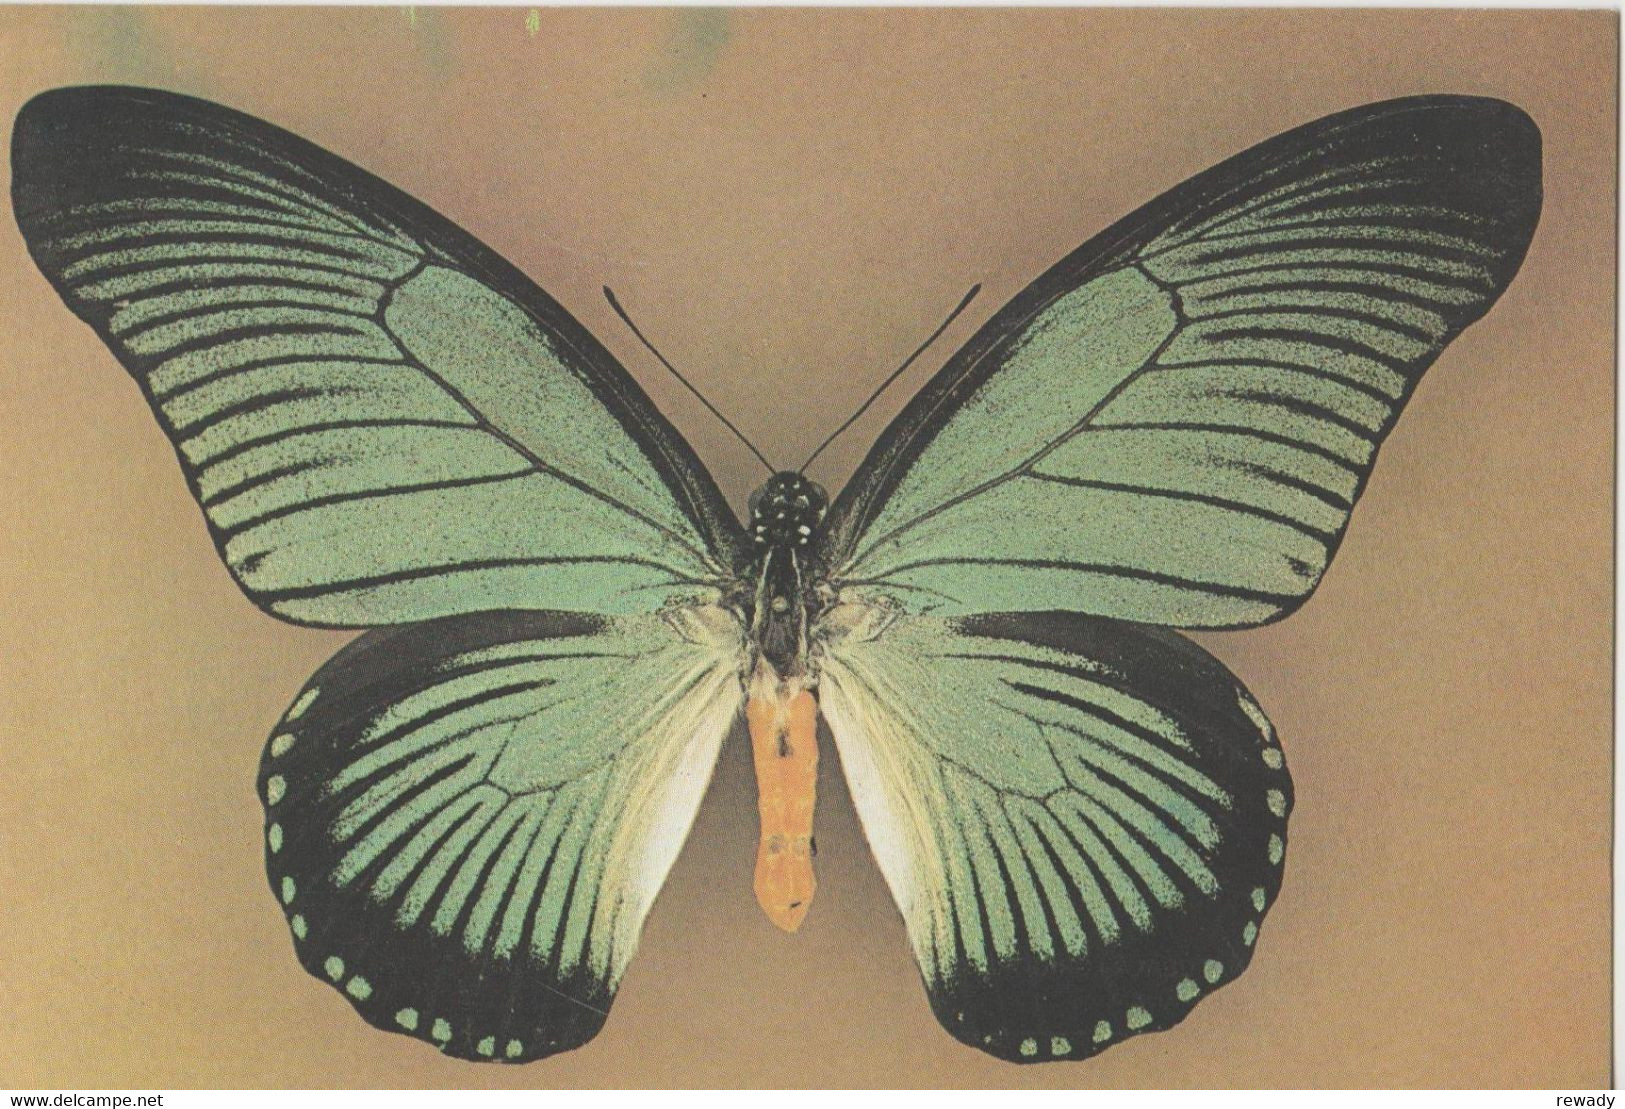 Papillon - Butterfly - Fluture - Iterus Zalmoxis - Papillons